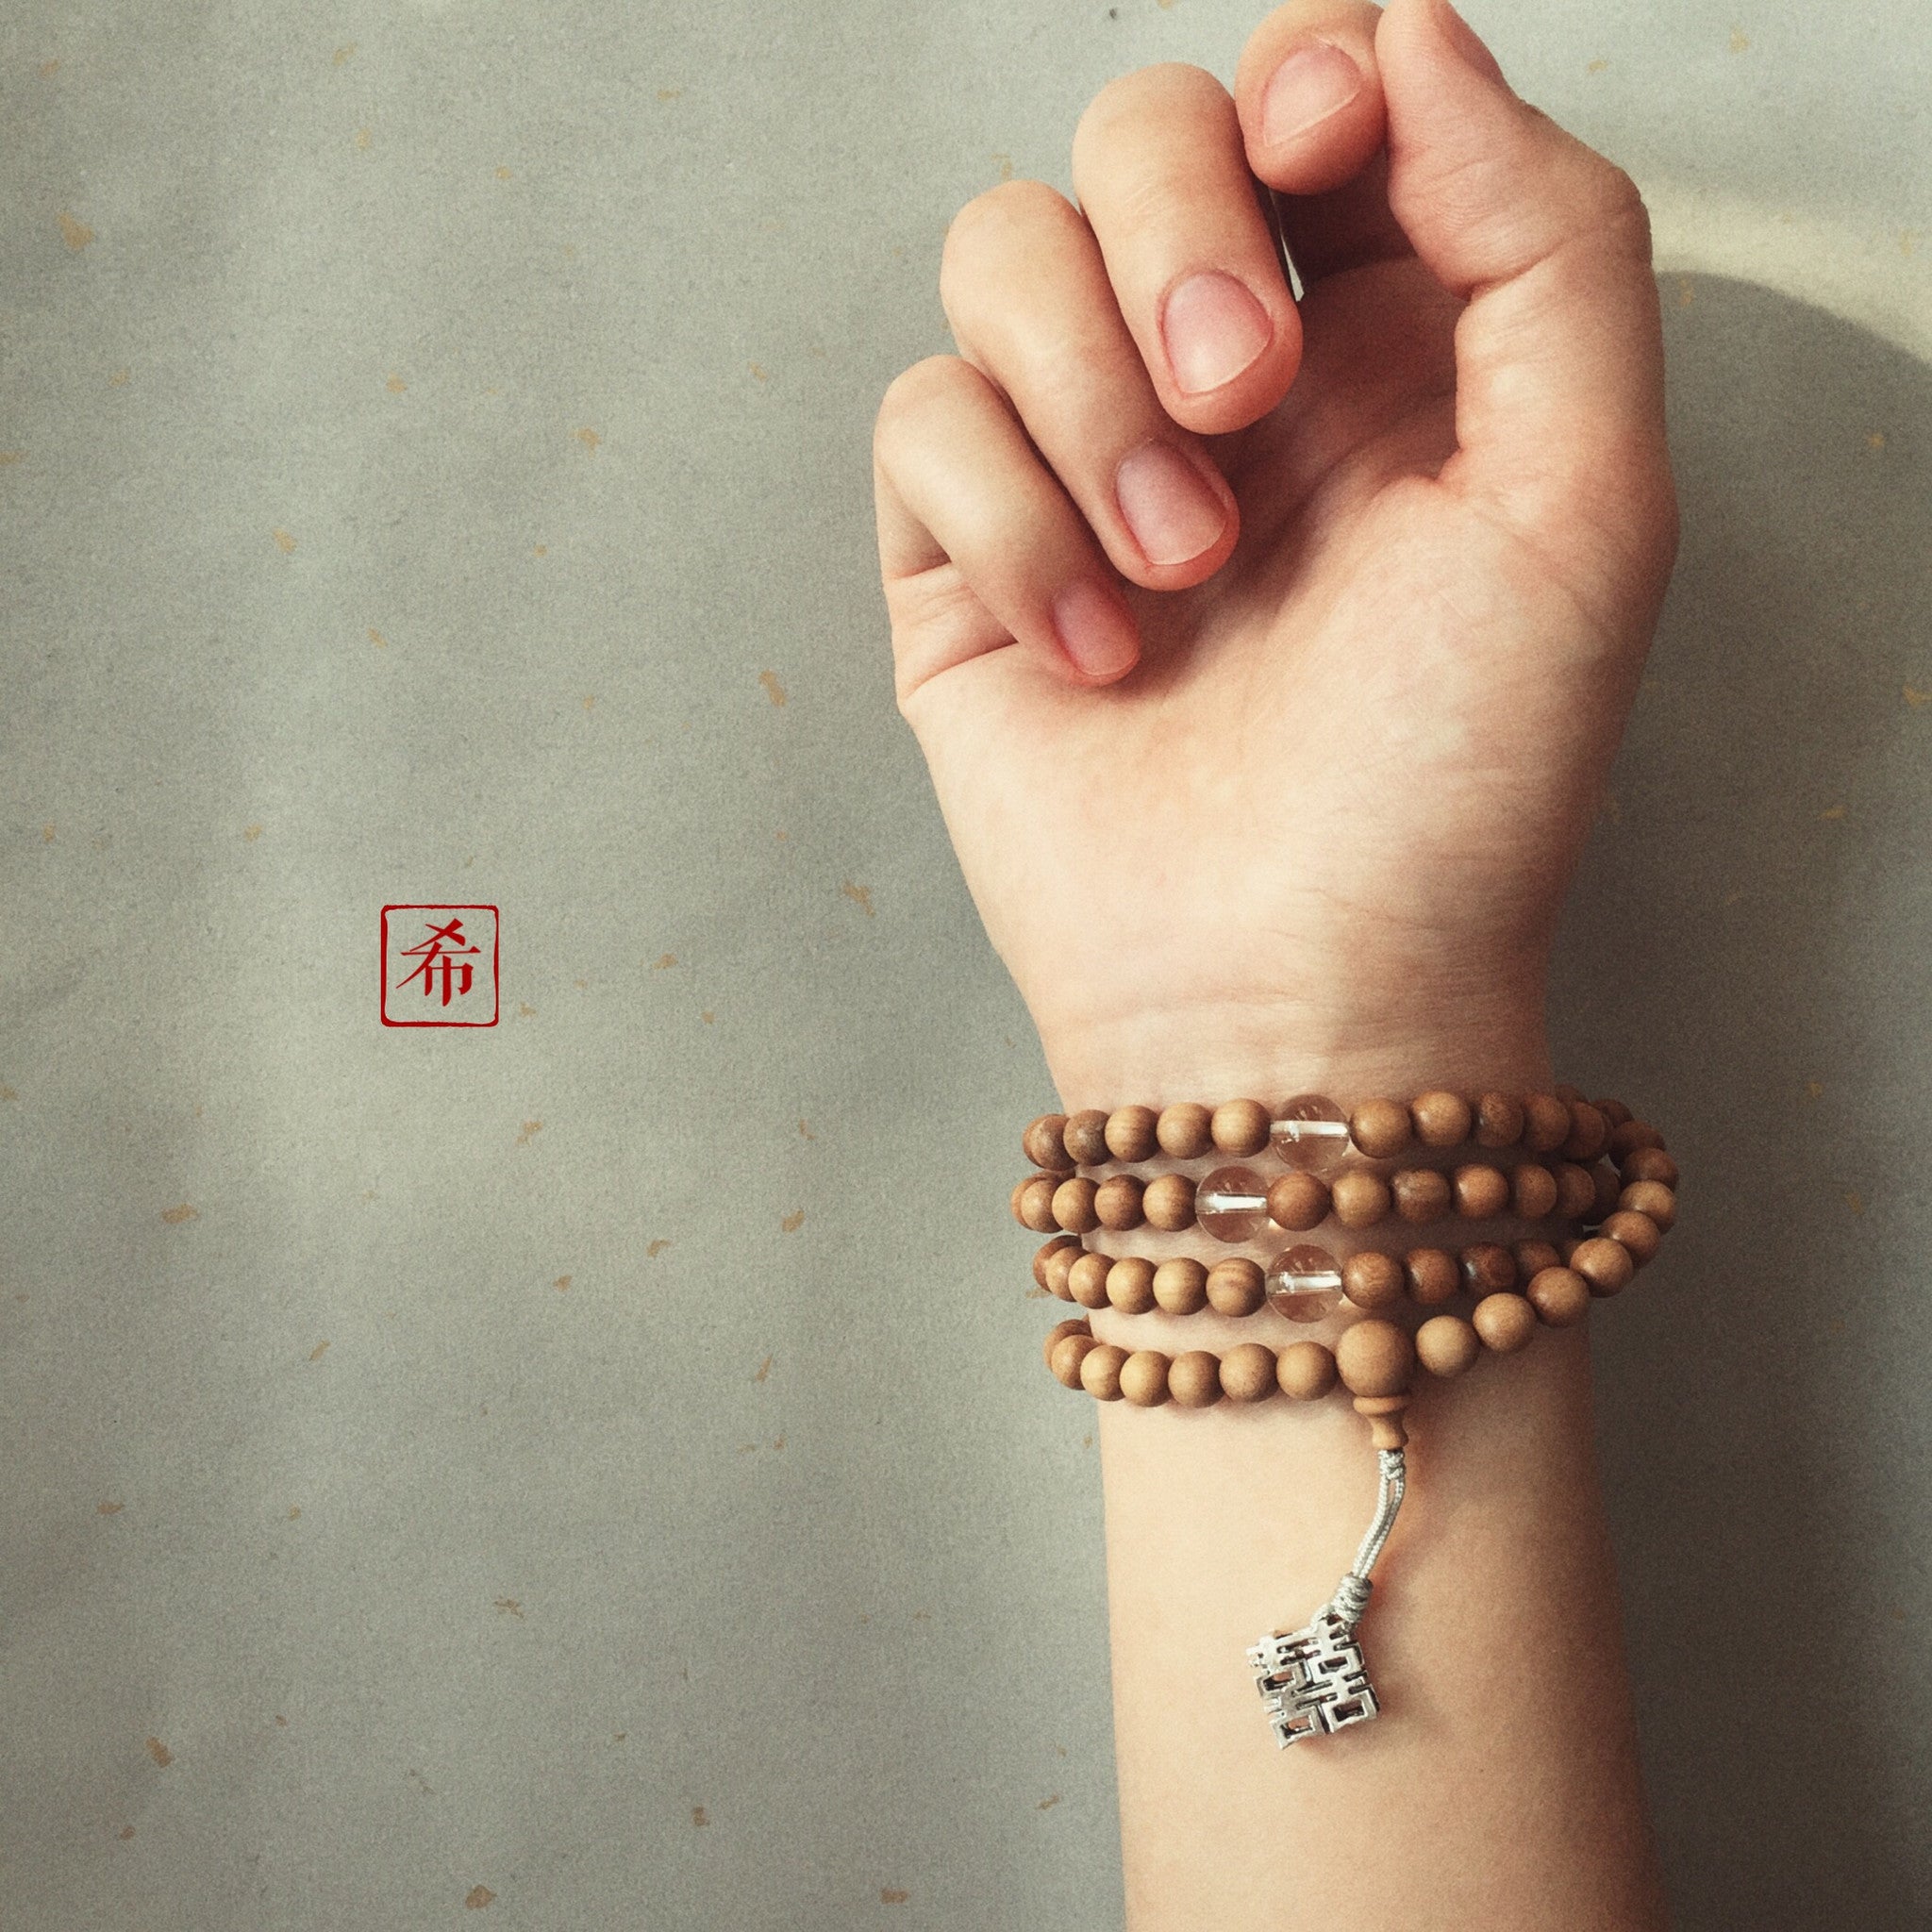 Agarwood Buddhist Prayer Bead Bracelet Tibetan Wrist Malas